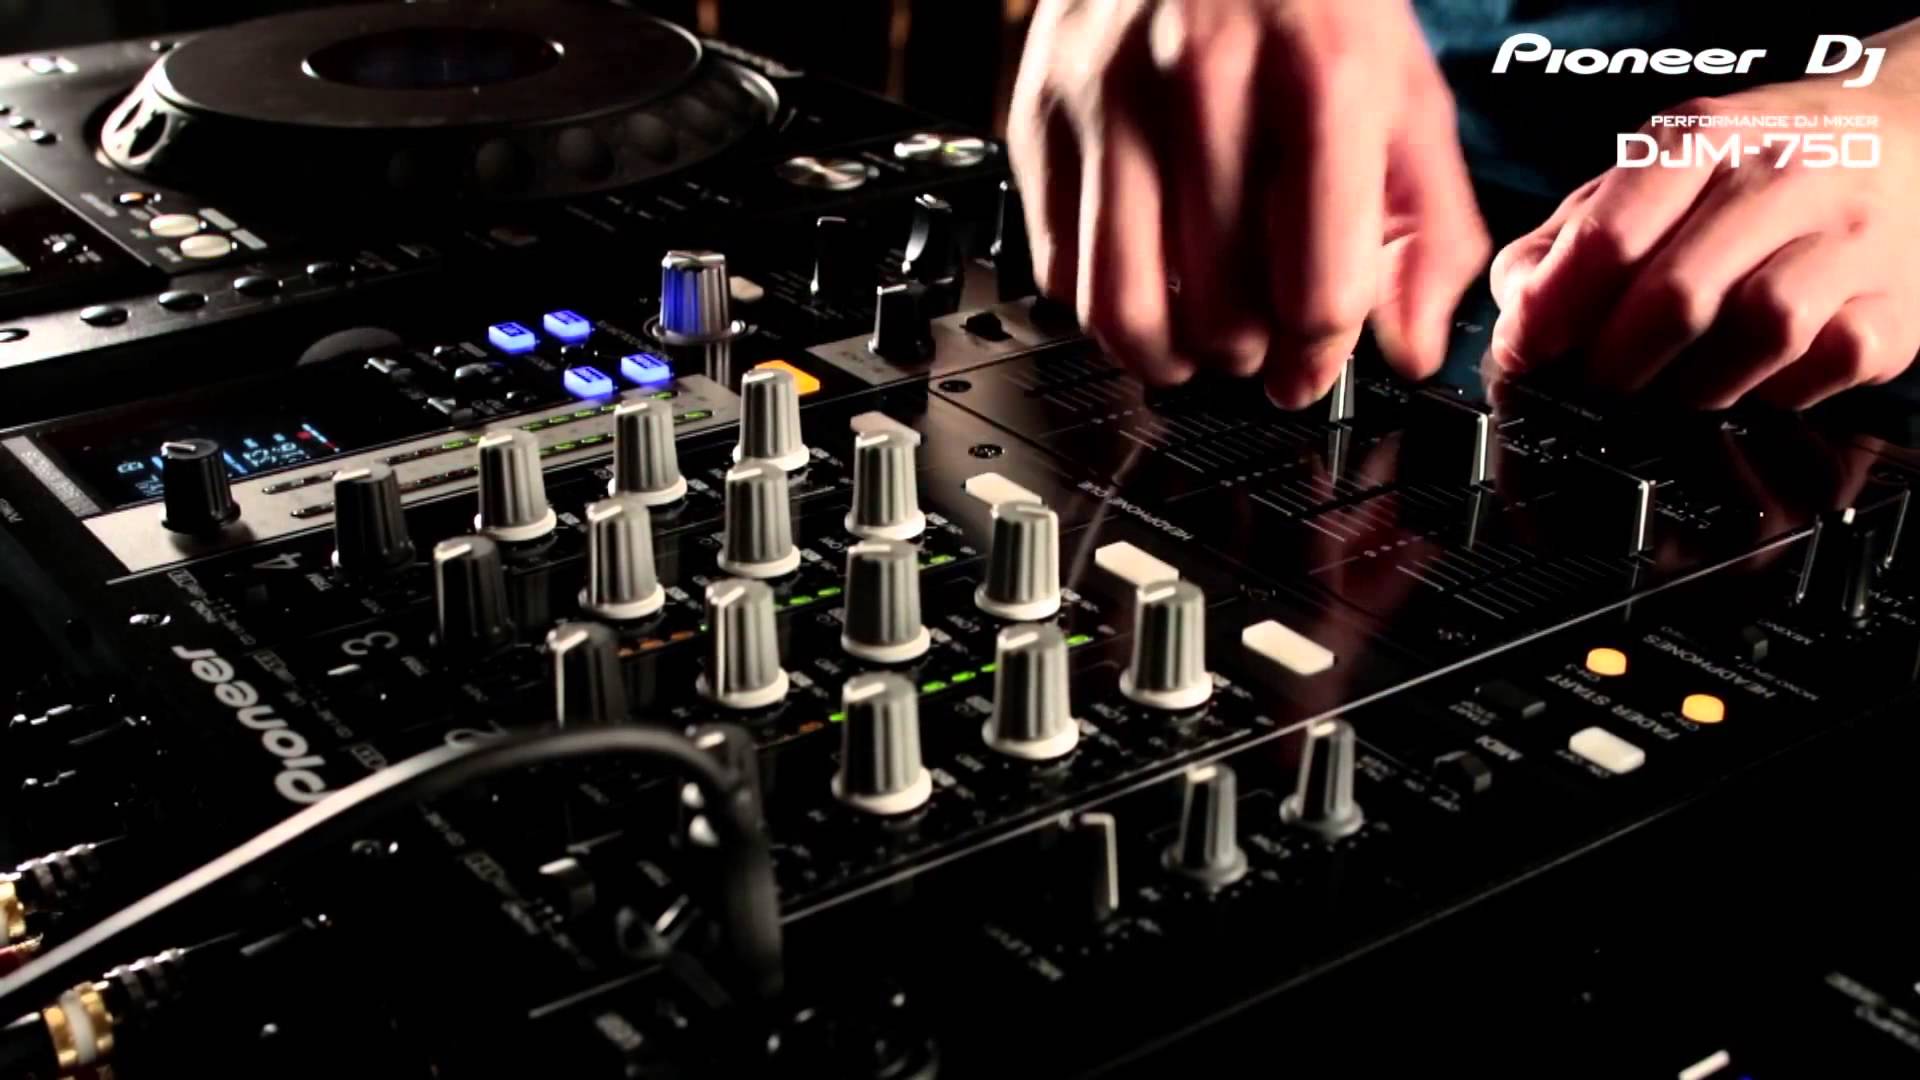 PIONEER DJM 750 Performance DJ Mixer